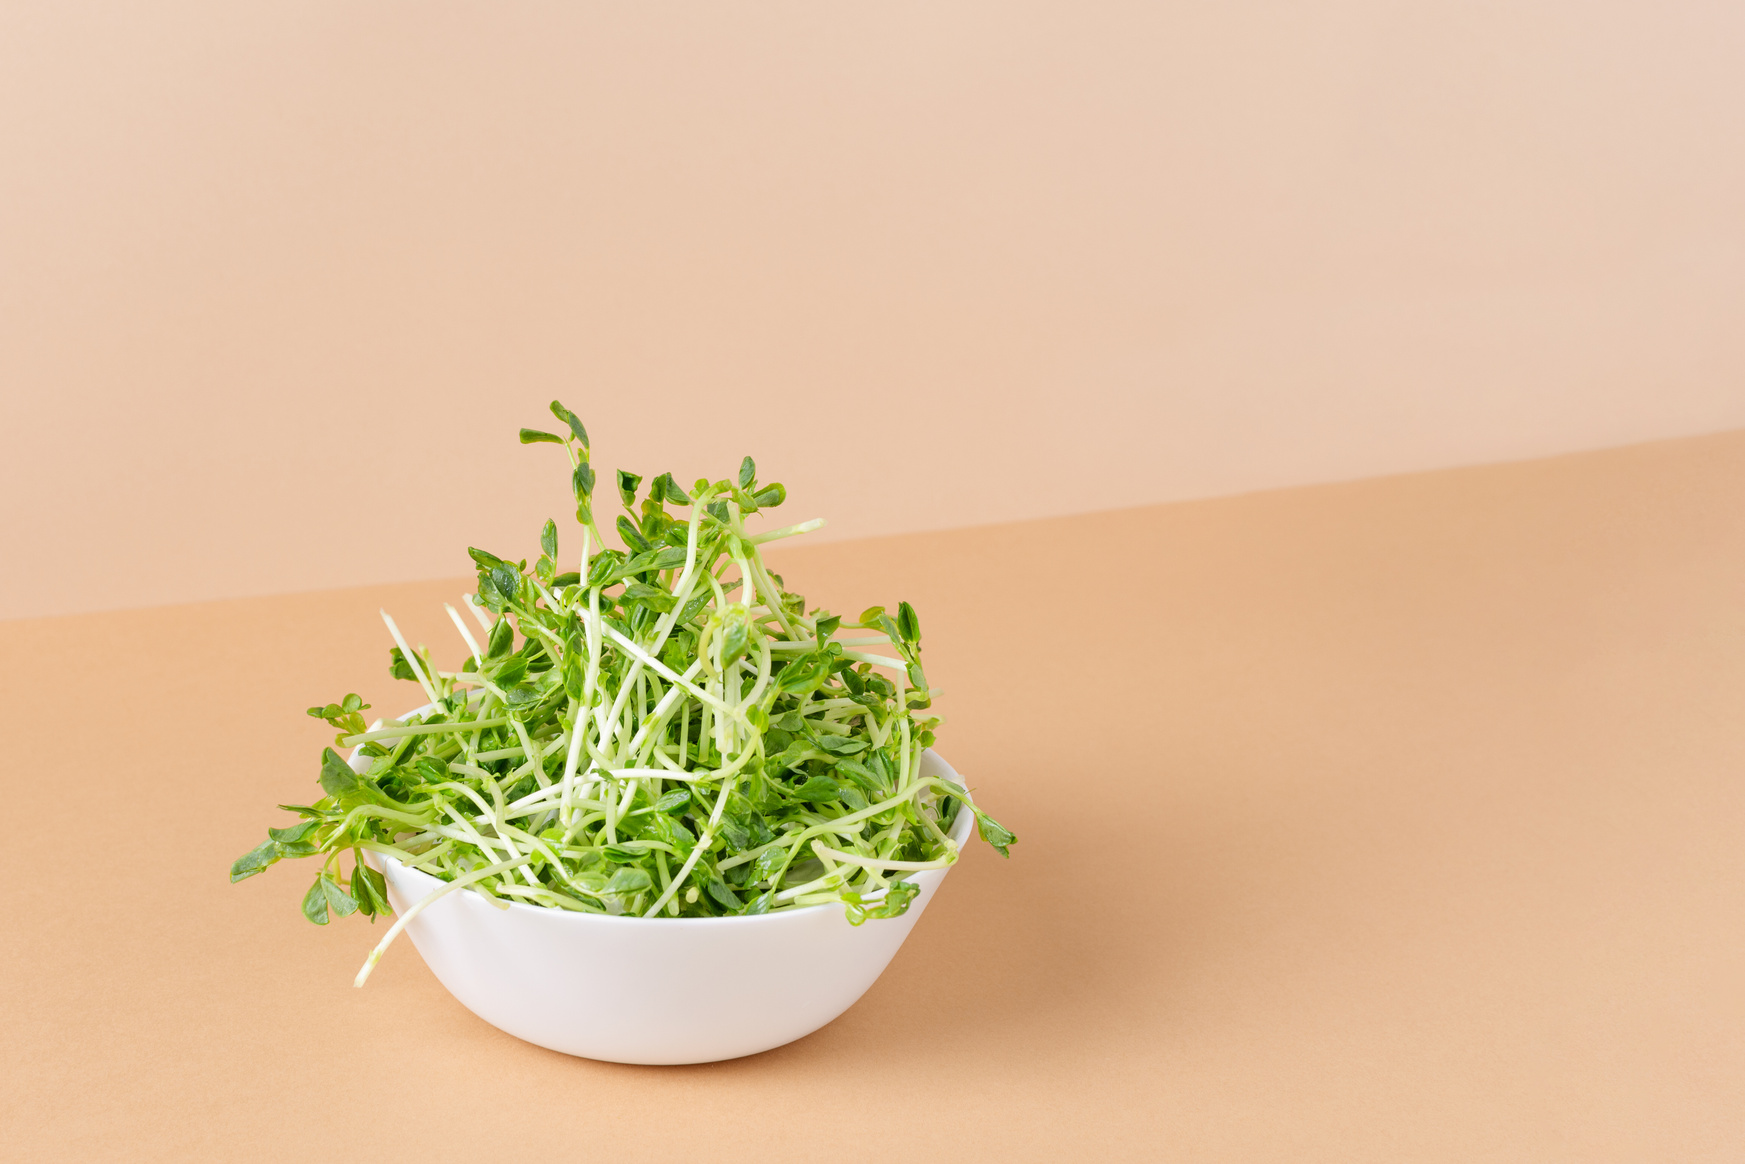 Bowl with Peas Microgreens